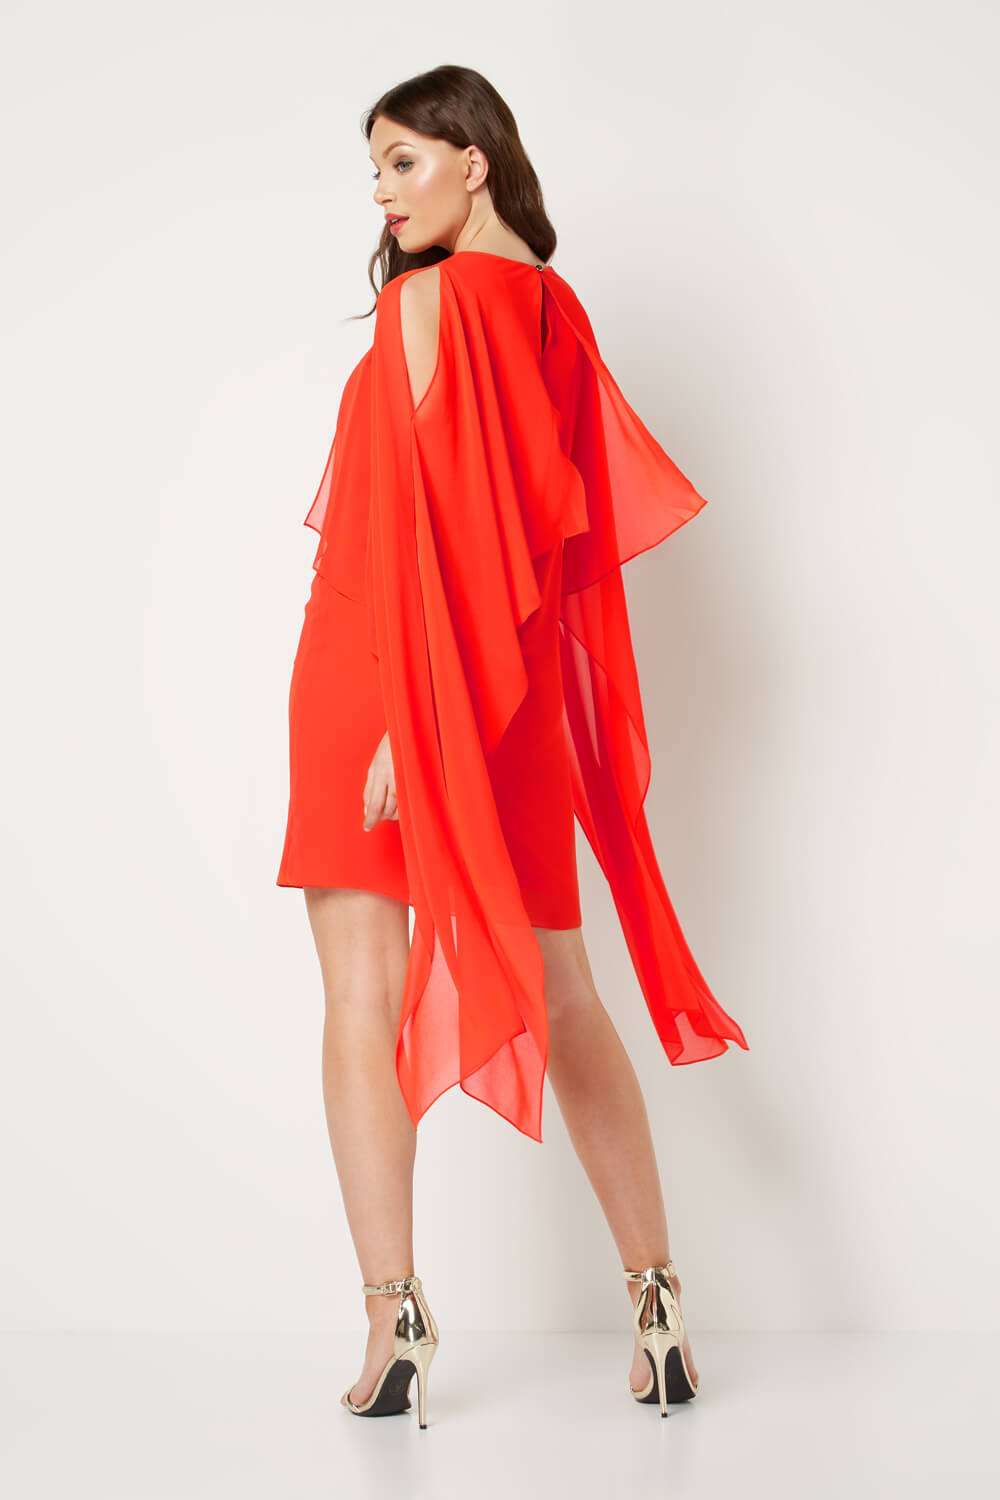 ORANGE Chiffon Cold Shoulder Sleeve Dress, Image 2 of 3